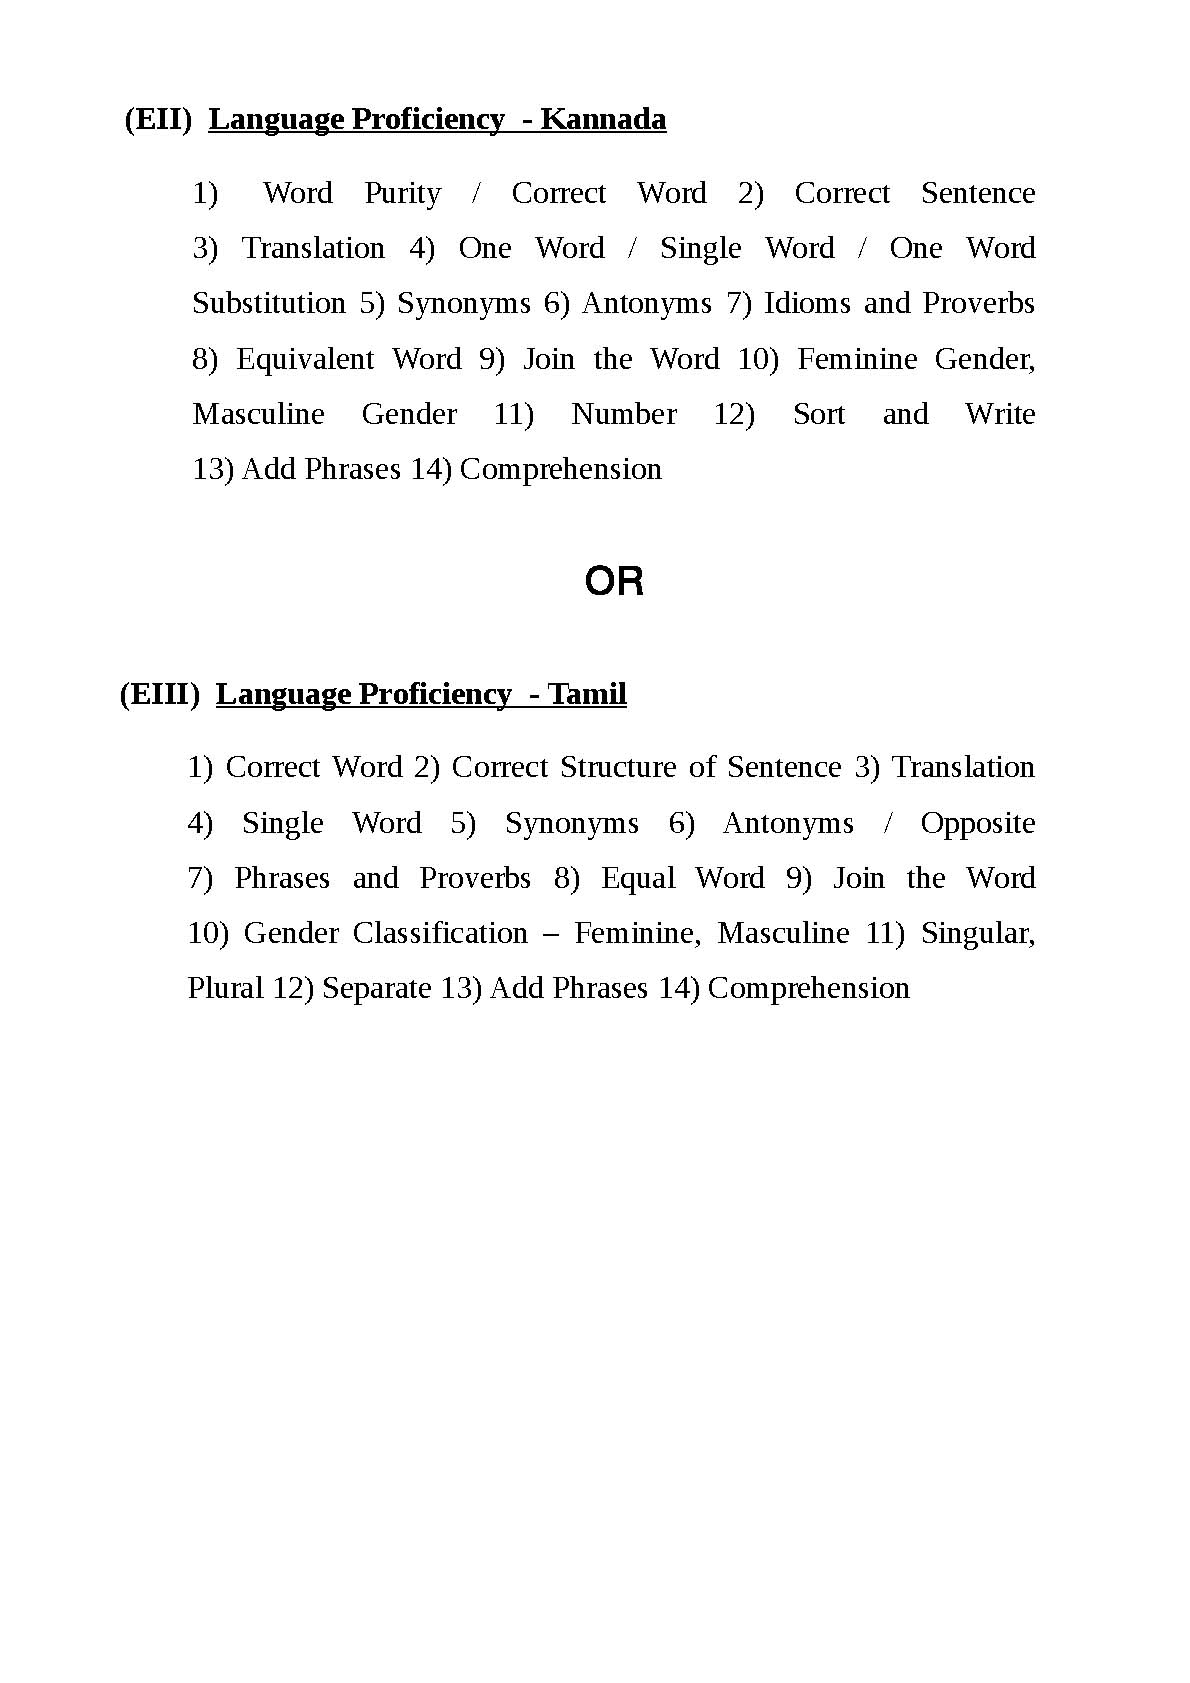 Kerala Administrative Service Preliminary Exam Syllabus - Notification Image 6